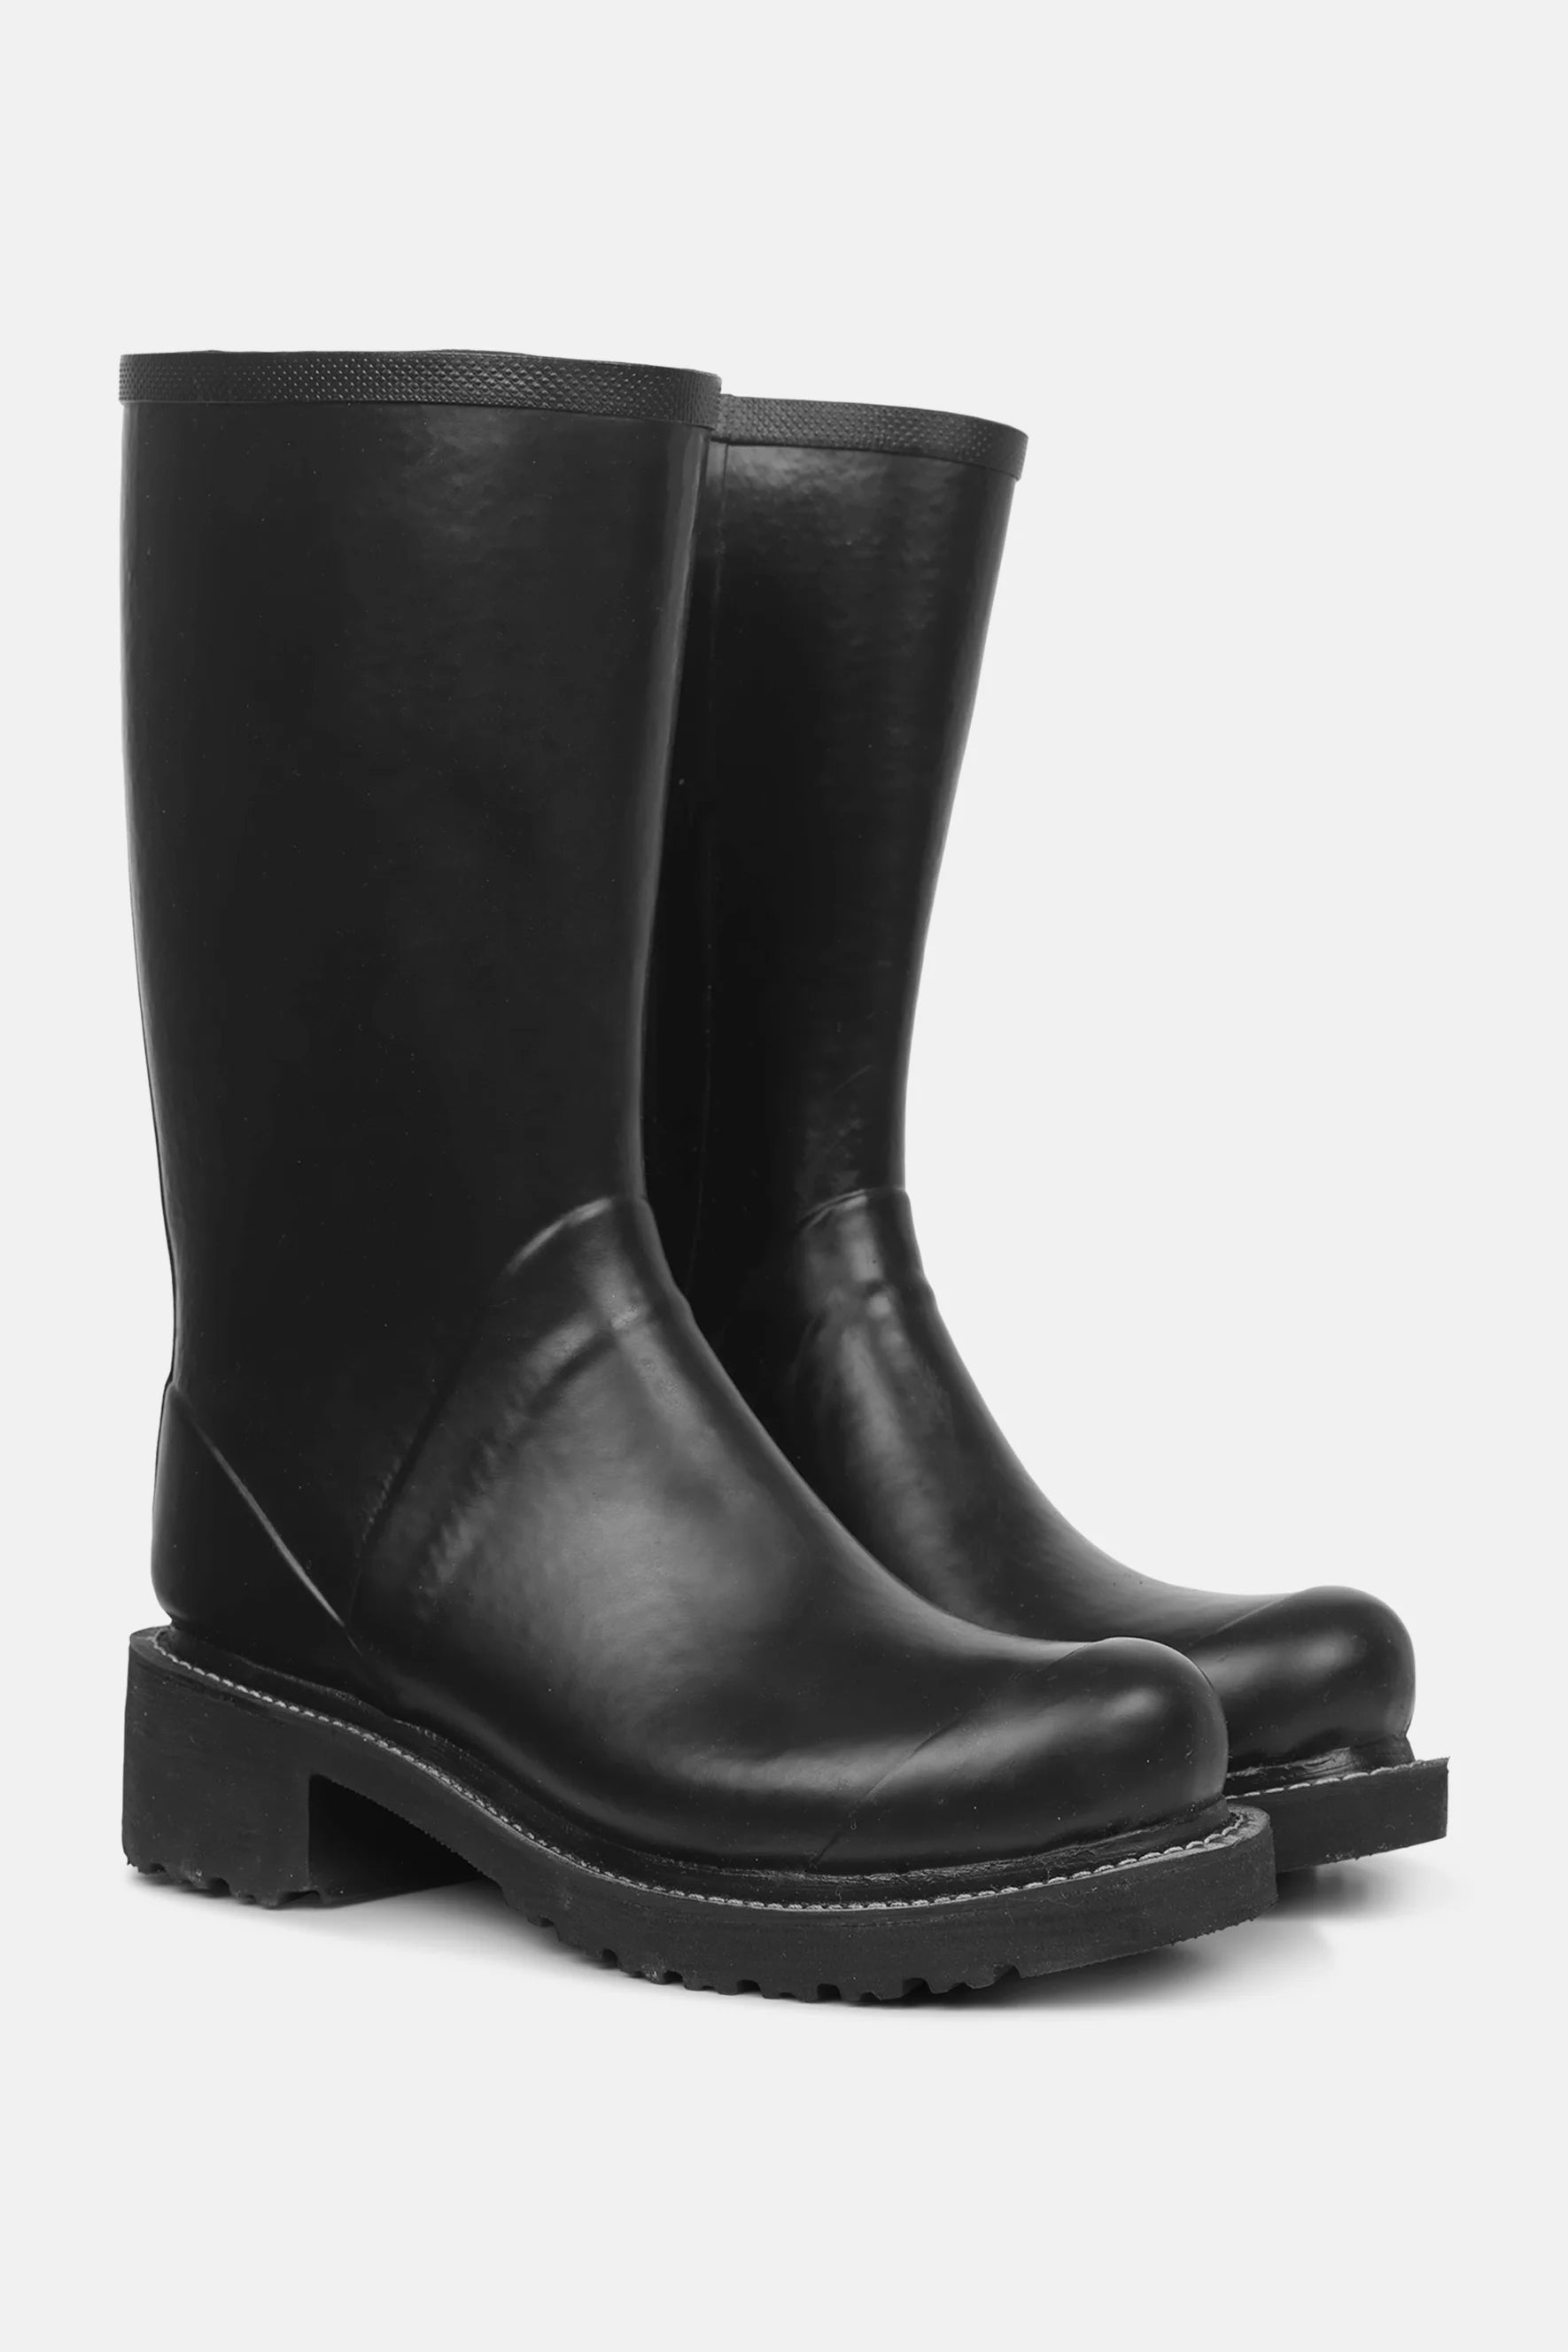 Ilse Jacobsen 3/4 Rubber Boots With Zip - Black